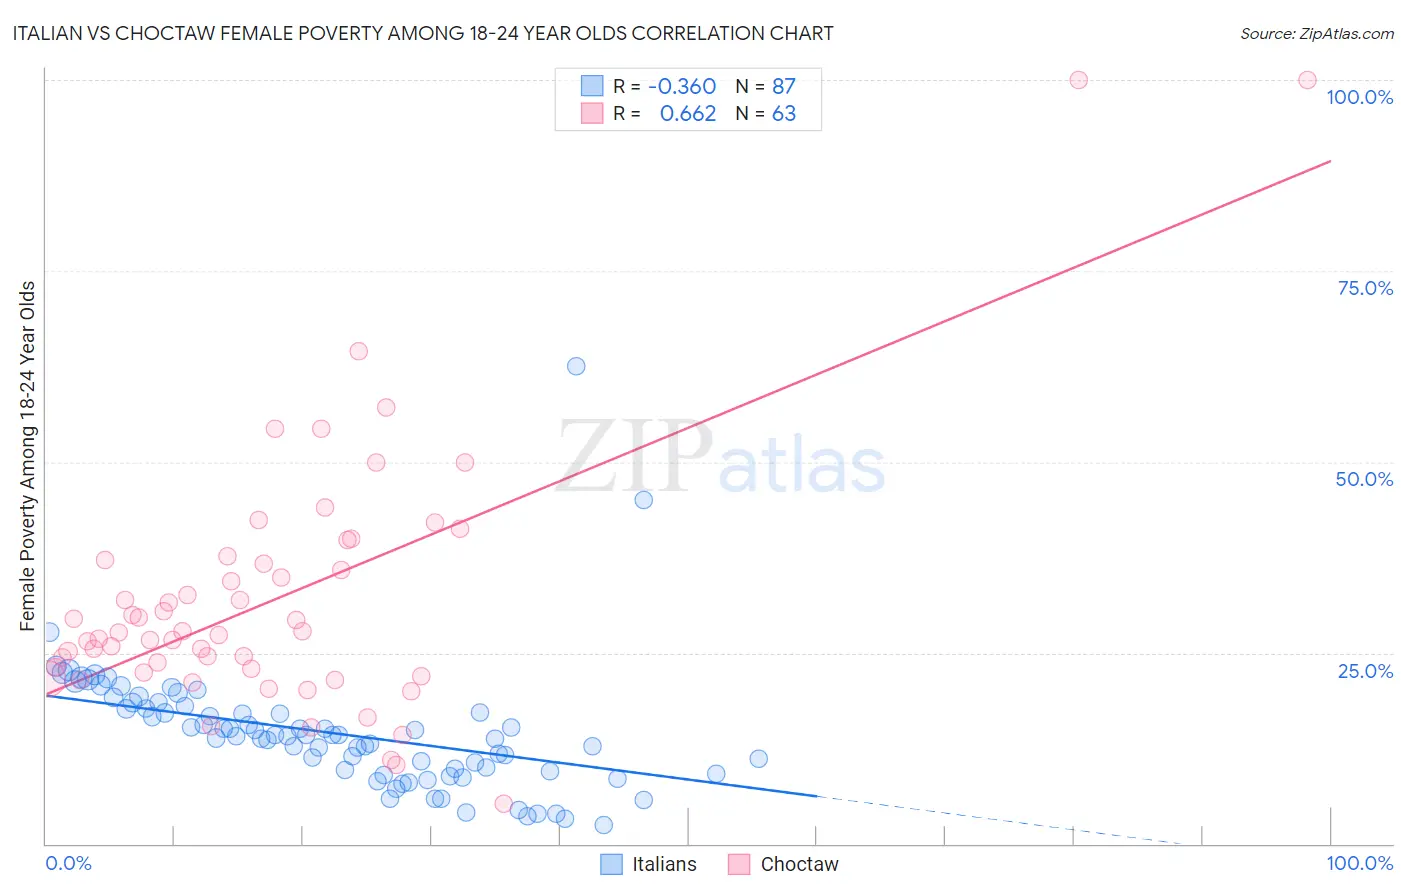 Italian vs Choctaw Female Poverty Among 18-24 Year Olds